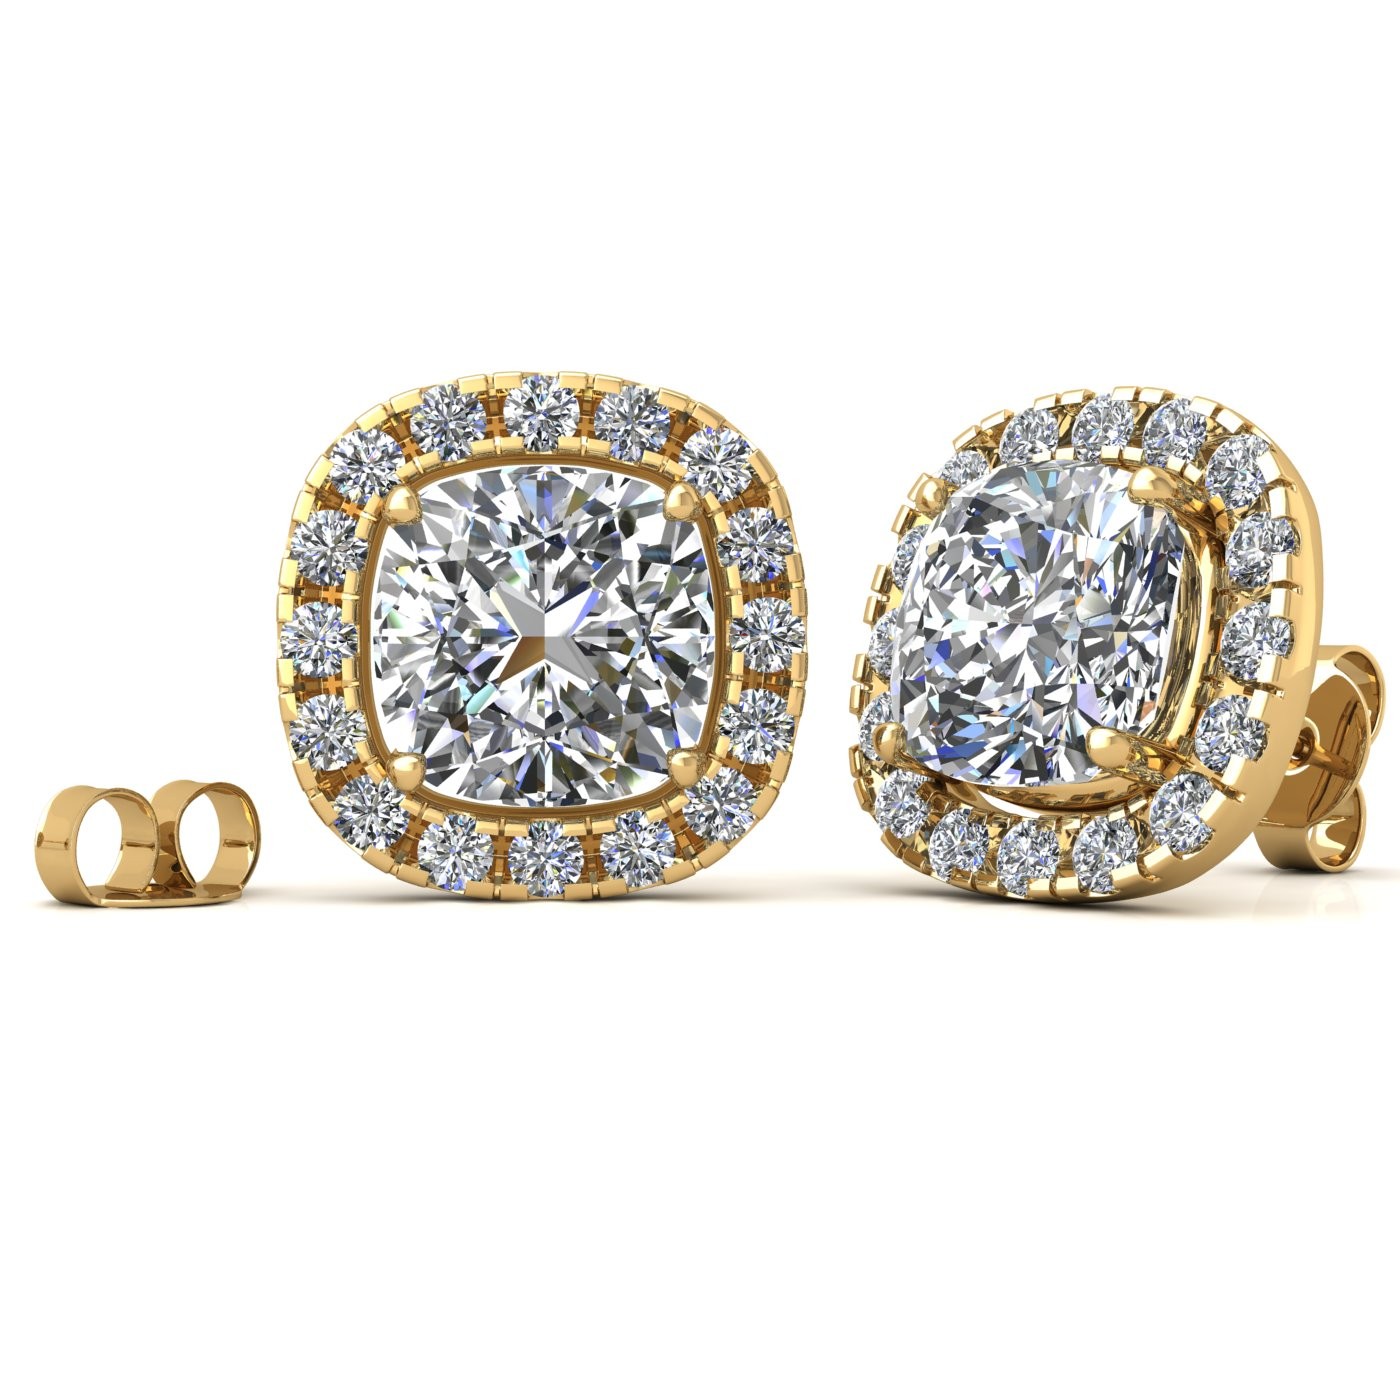 18k yellow gold  0,7 ct each (1,4 tcw) 4 prongs cushion shape diamond earrings with diamond pavÉ set halo Photos & images